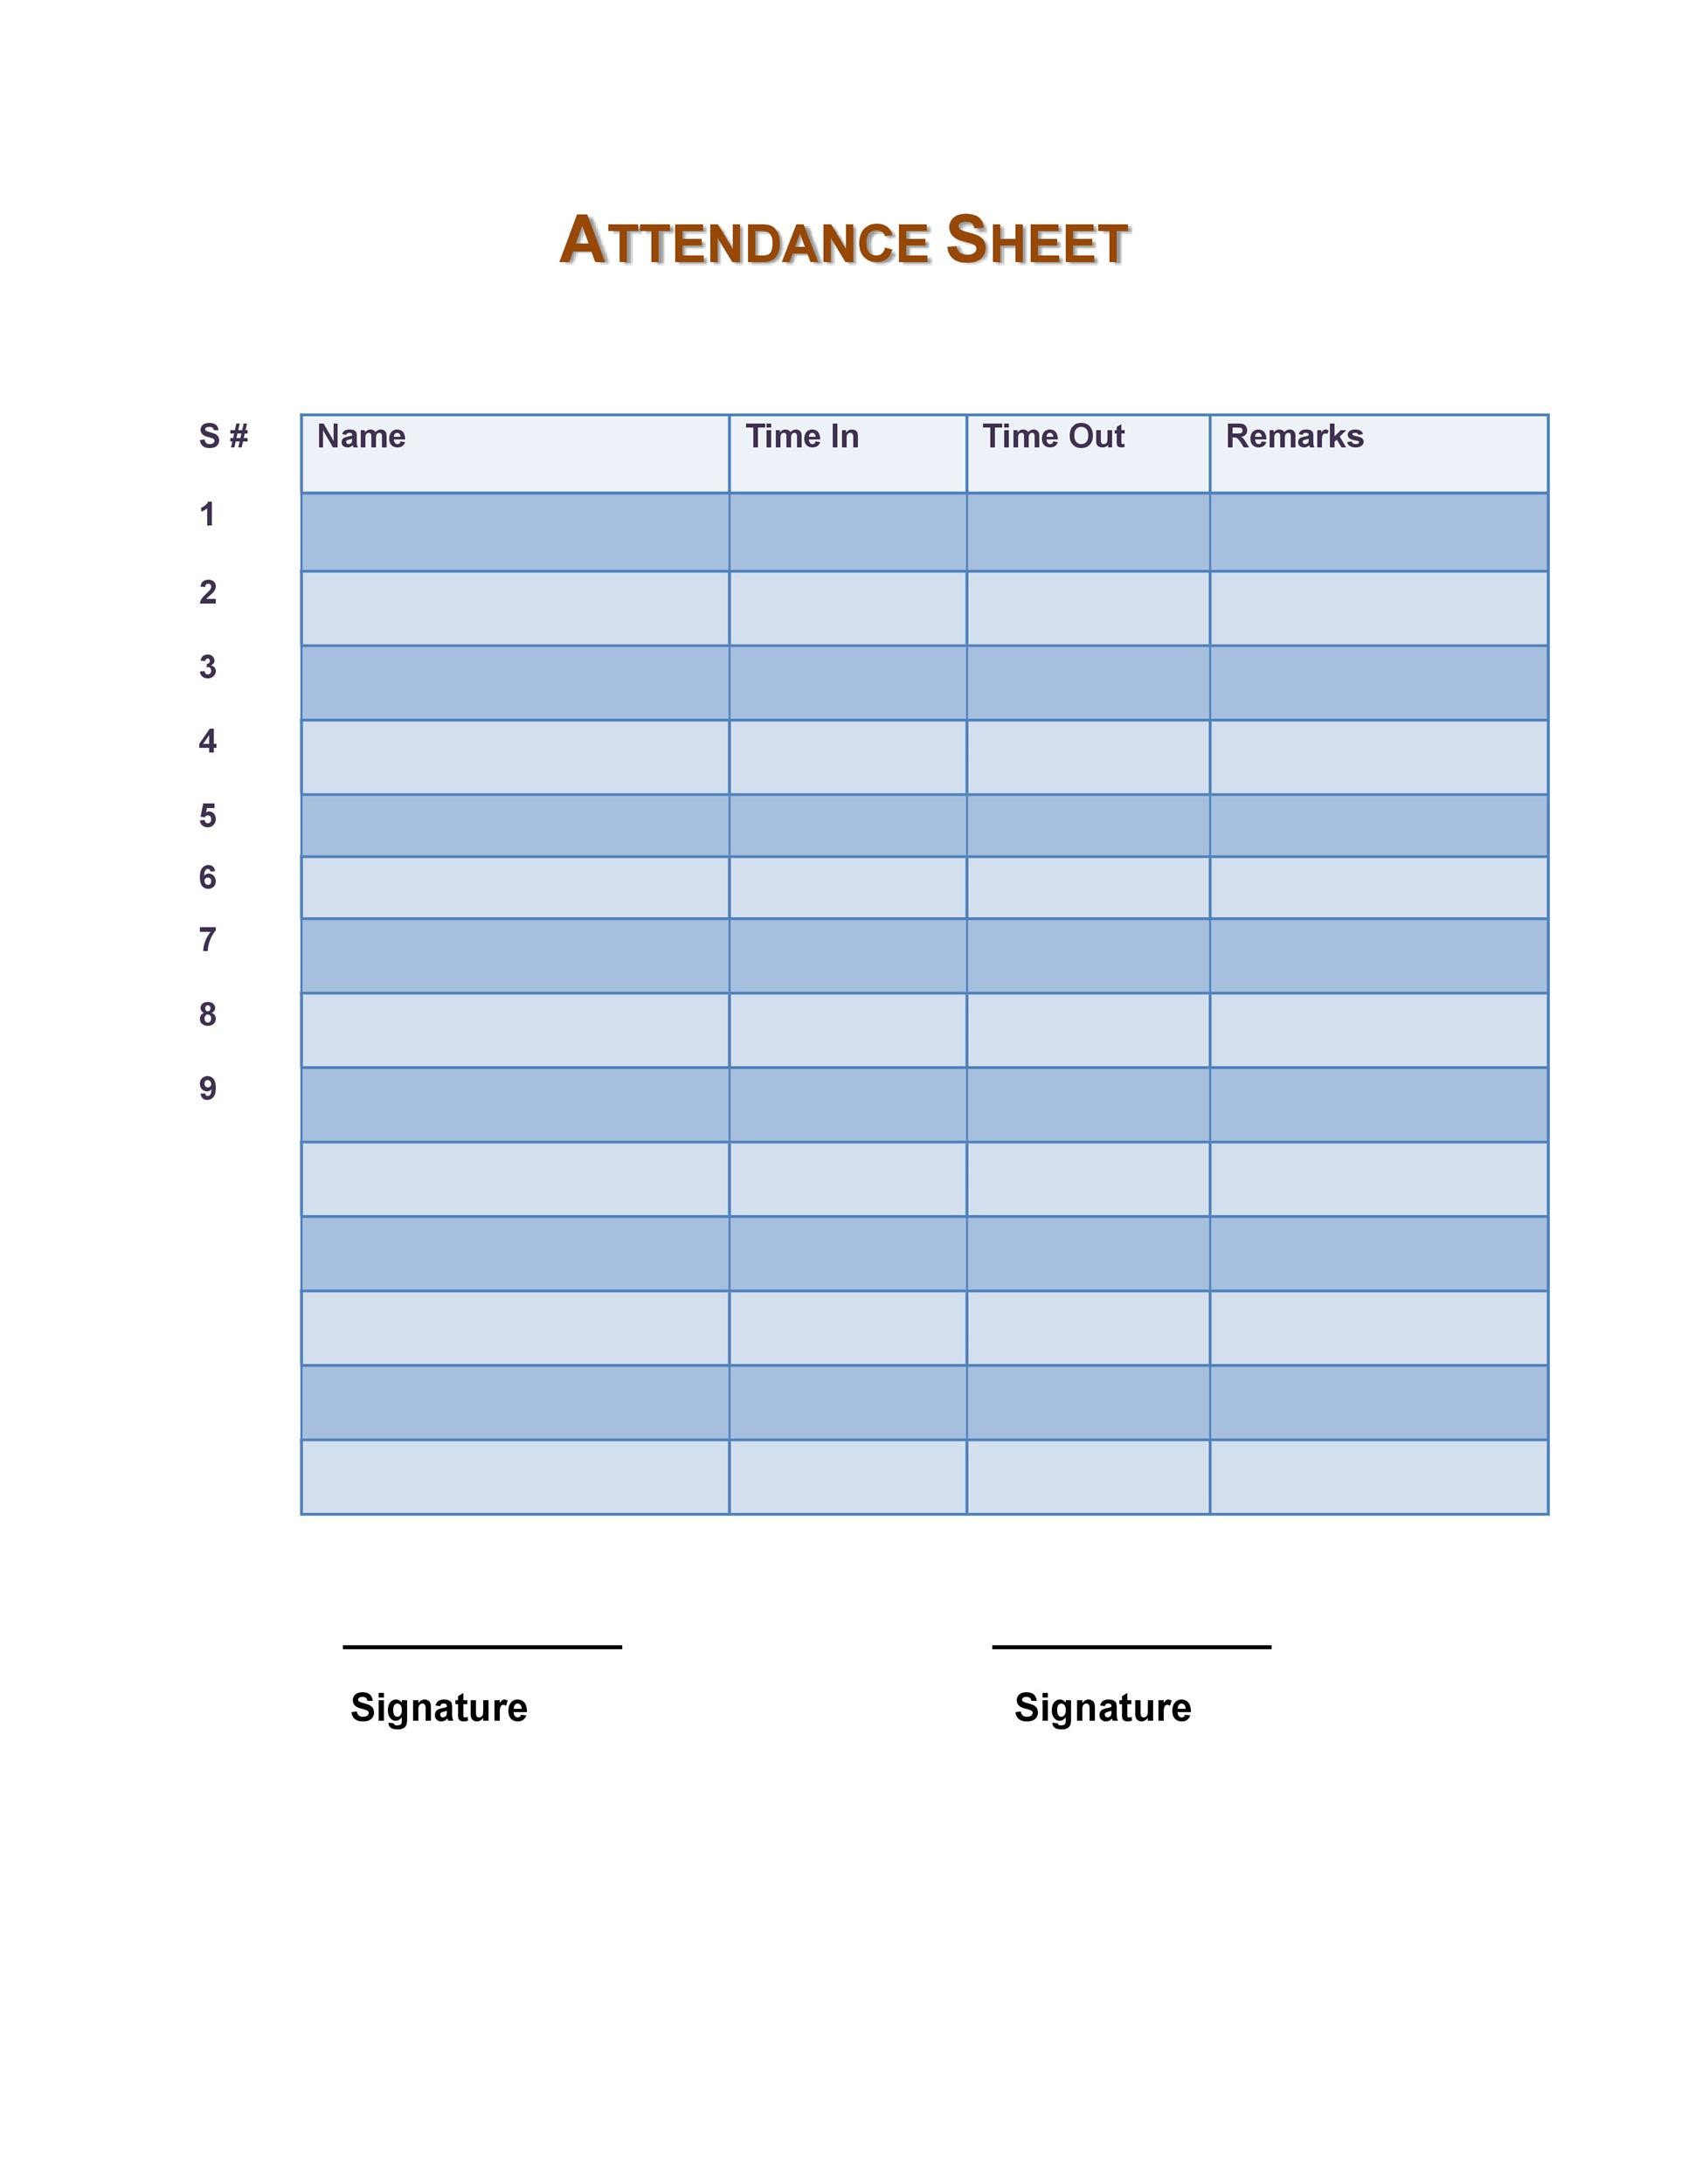 How Do I Make An Attendance Sheet In Google Sheets